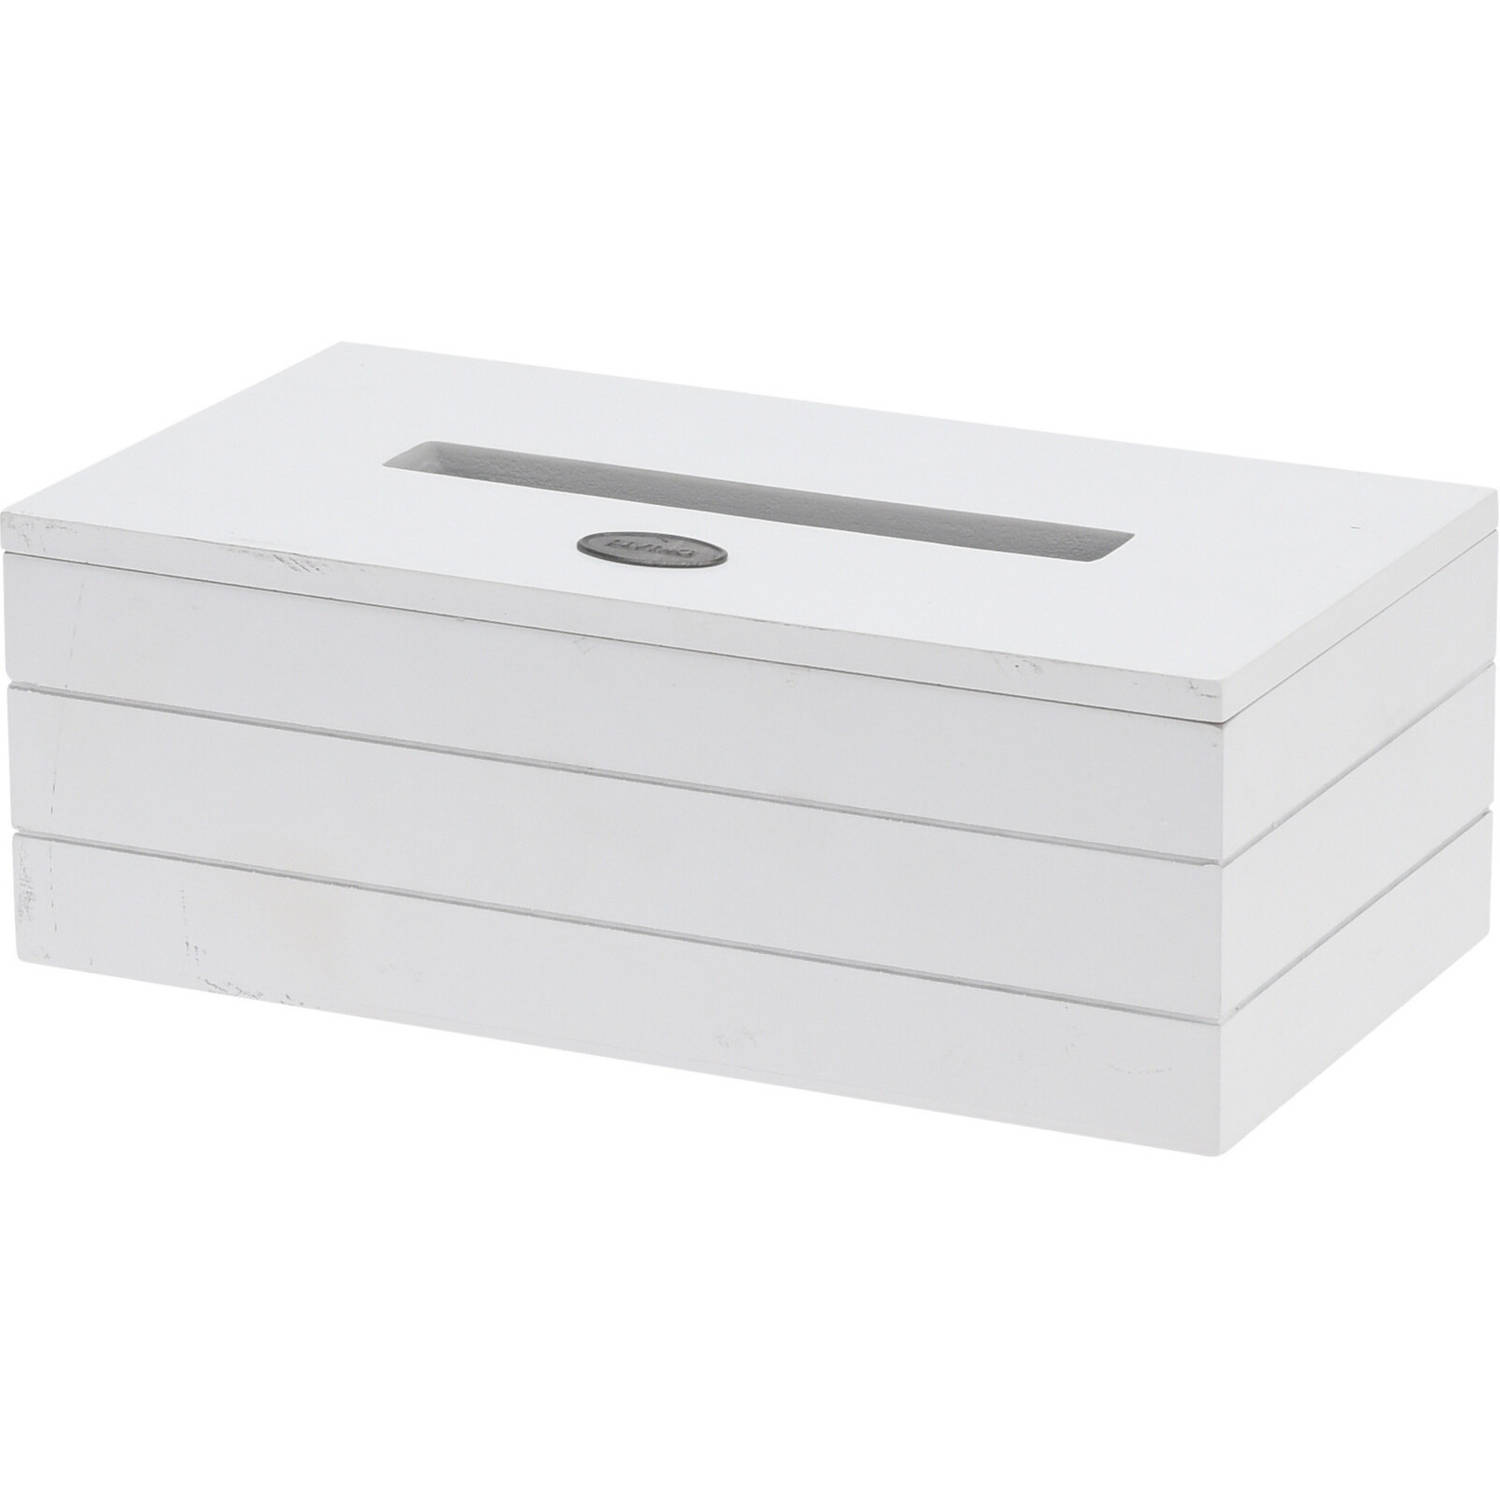 Tissuedoos/tissuebox wit rechthoekig van mdf 25 x 13 x 9 cm - Tissuehouders